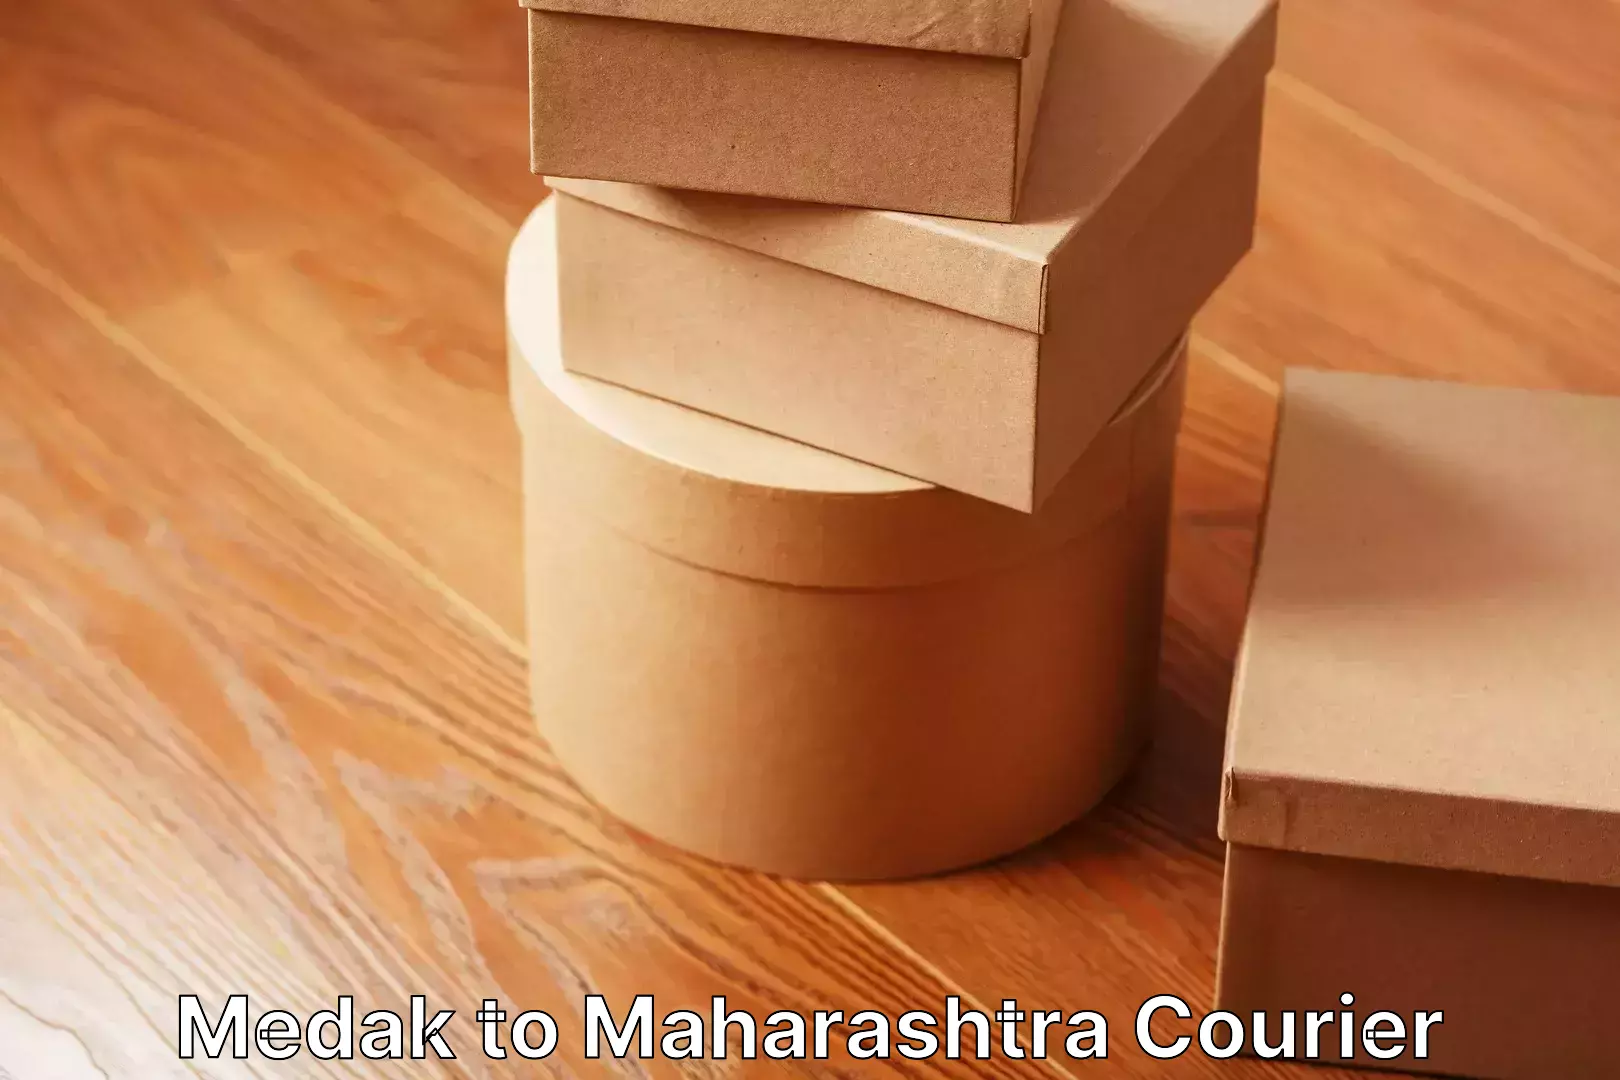 Quality moving and storage Medak to Maharashtra